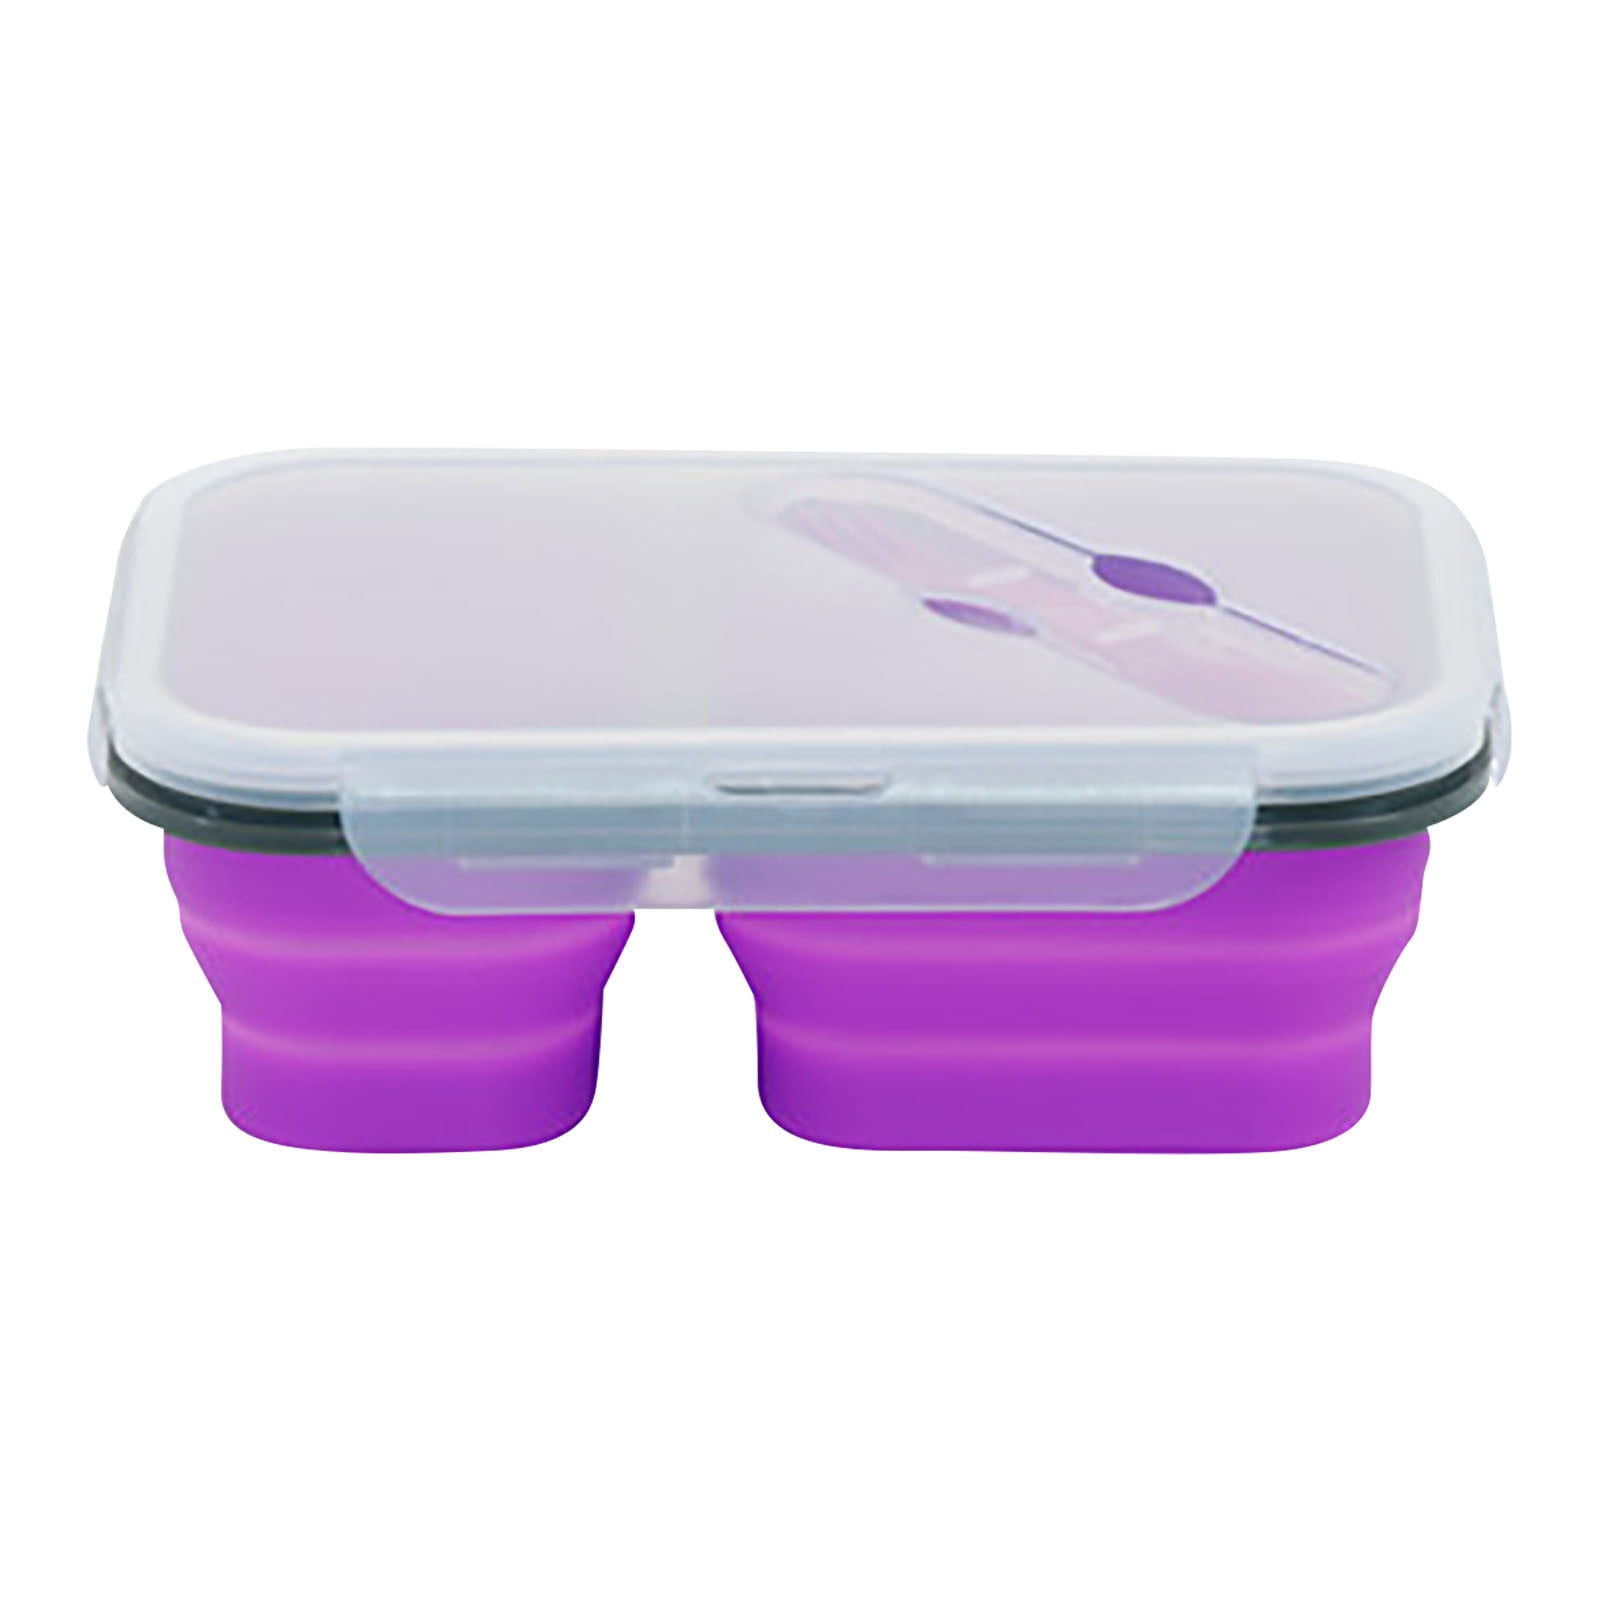 XMMSWDLA Collapsible Bento Box, Lunch Box 2 Compartment, Premium